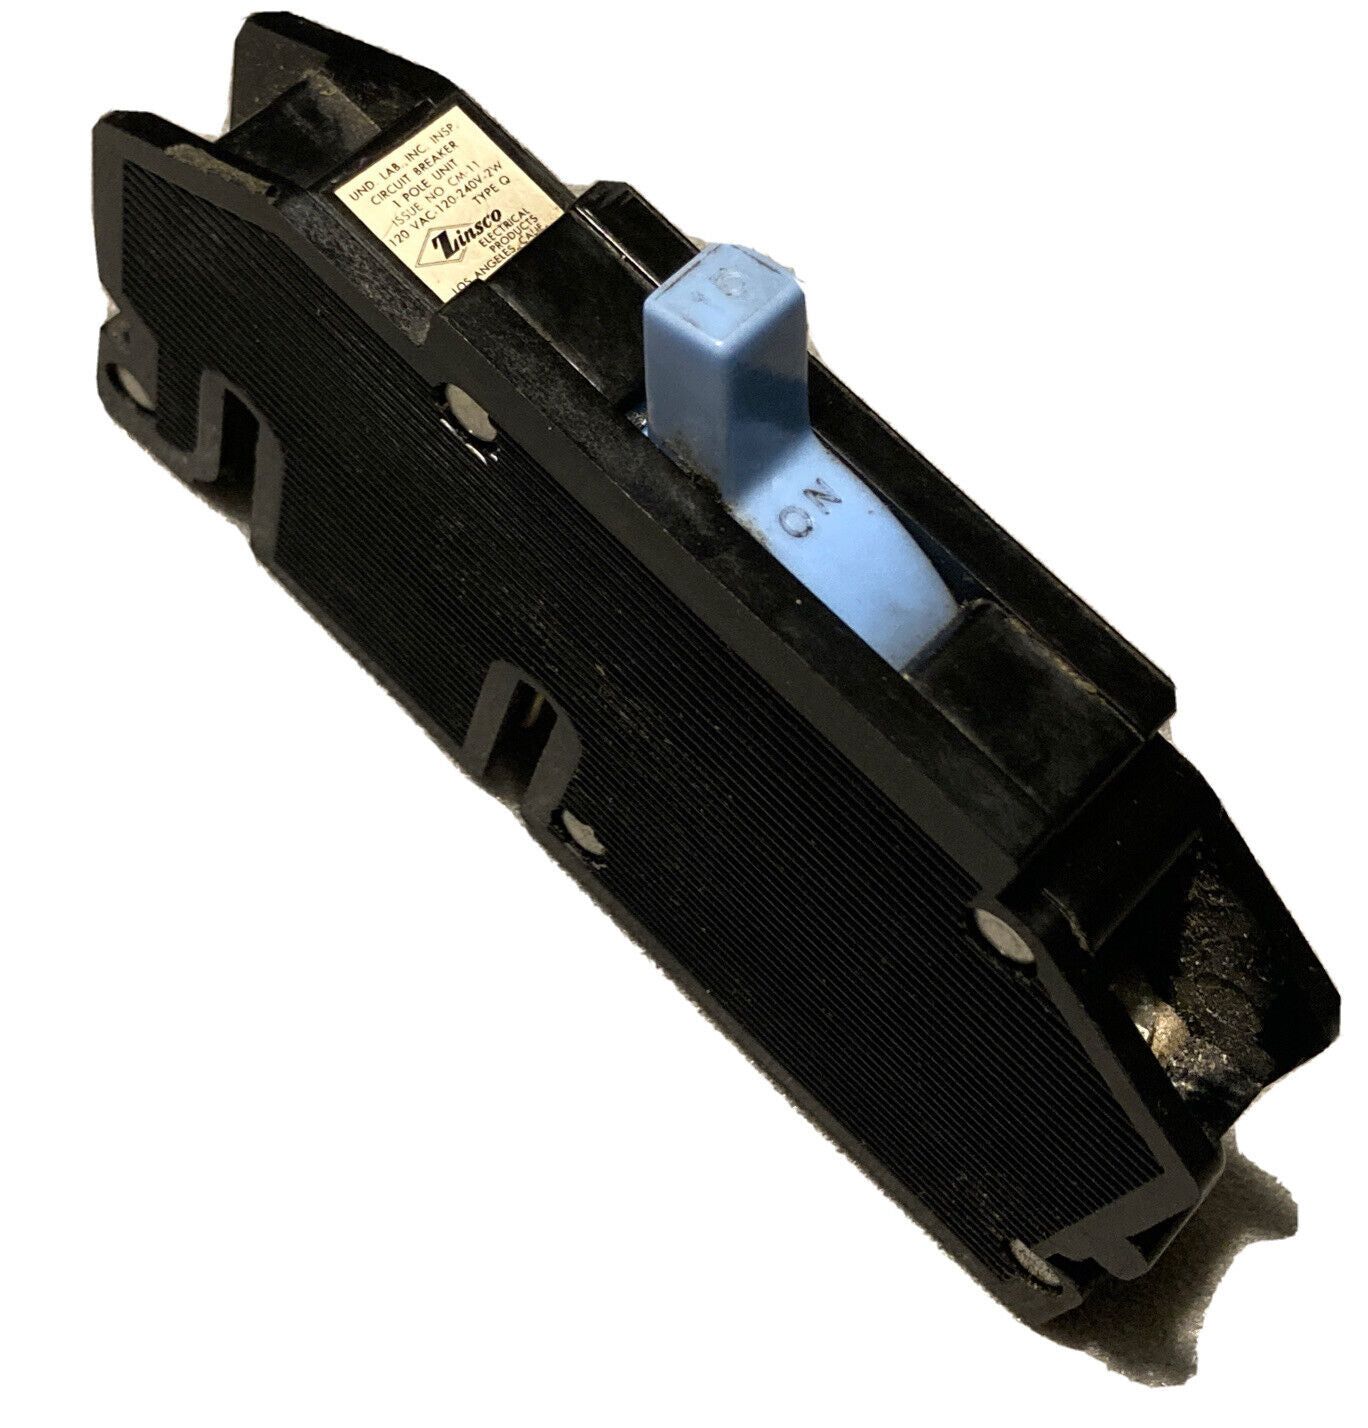 Zinsco Q-15 1-Pole 15-Amp Blue-Tip Circuit Breaker - Re-Certified